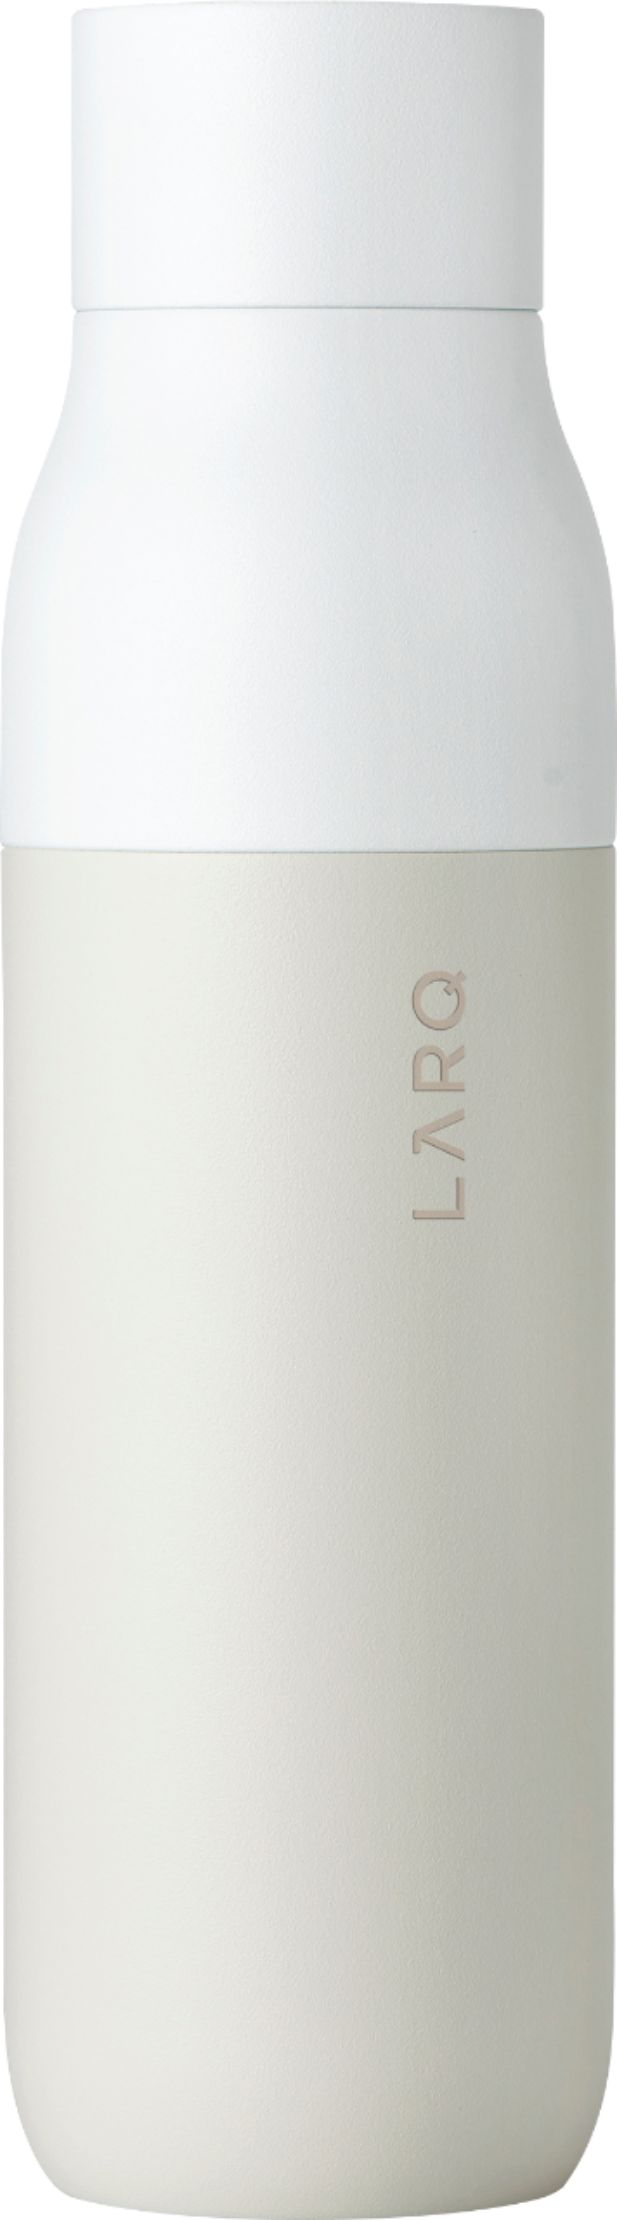 LARQ Bottle PureVis Granite White